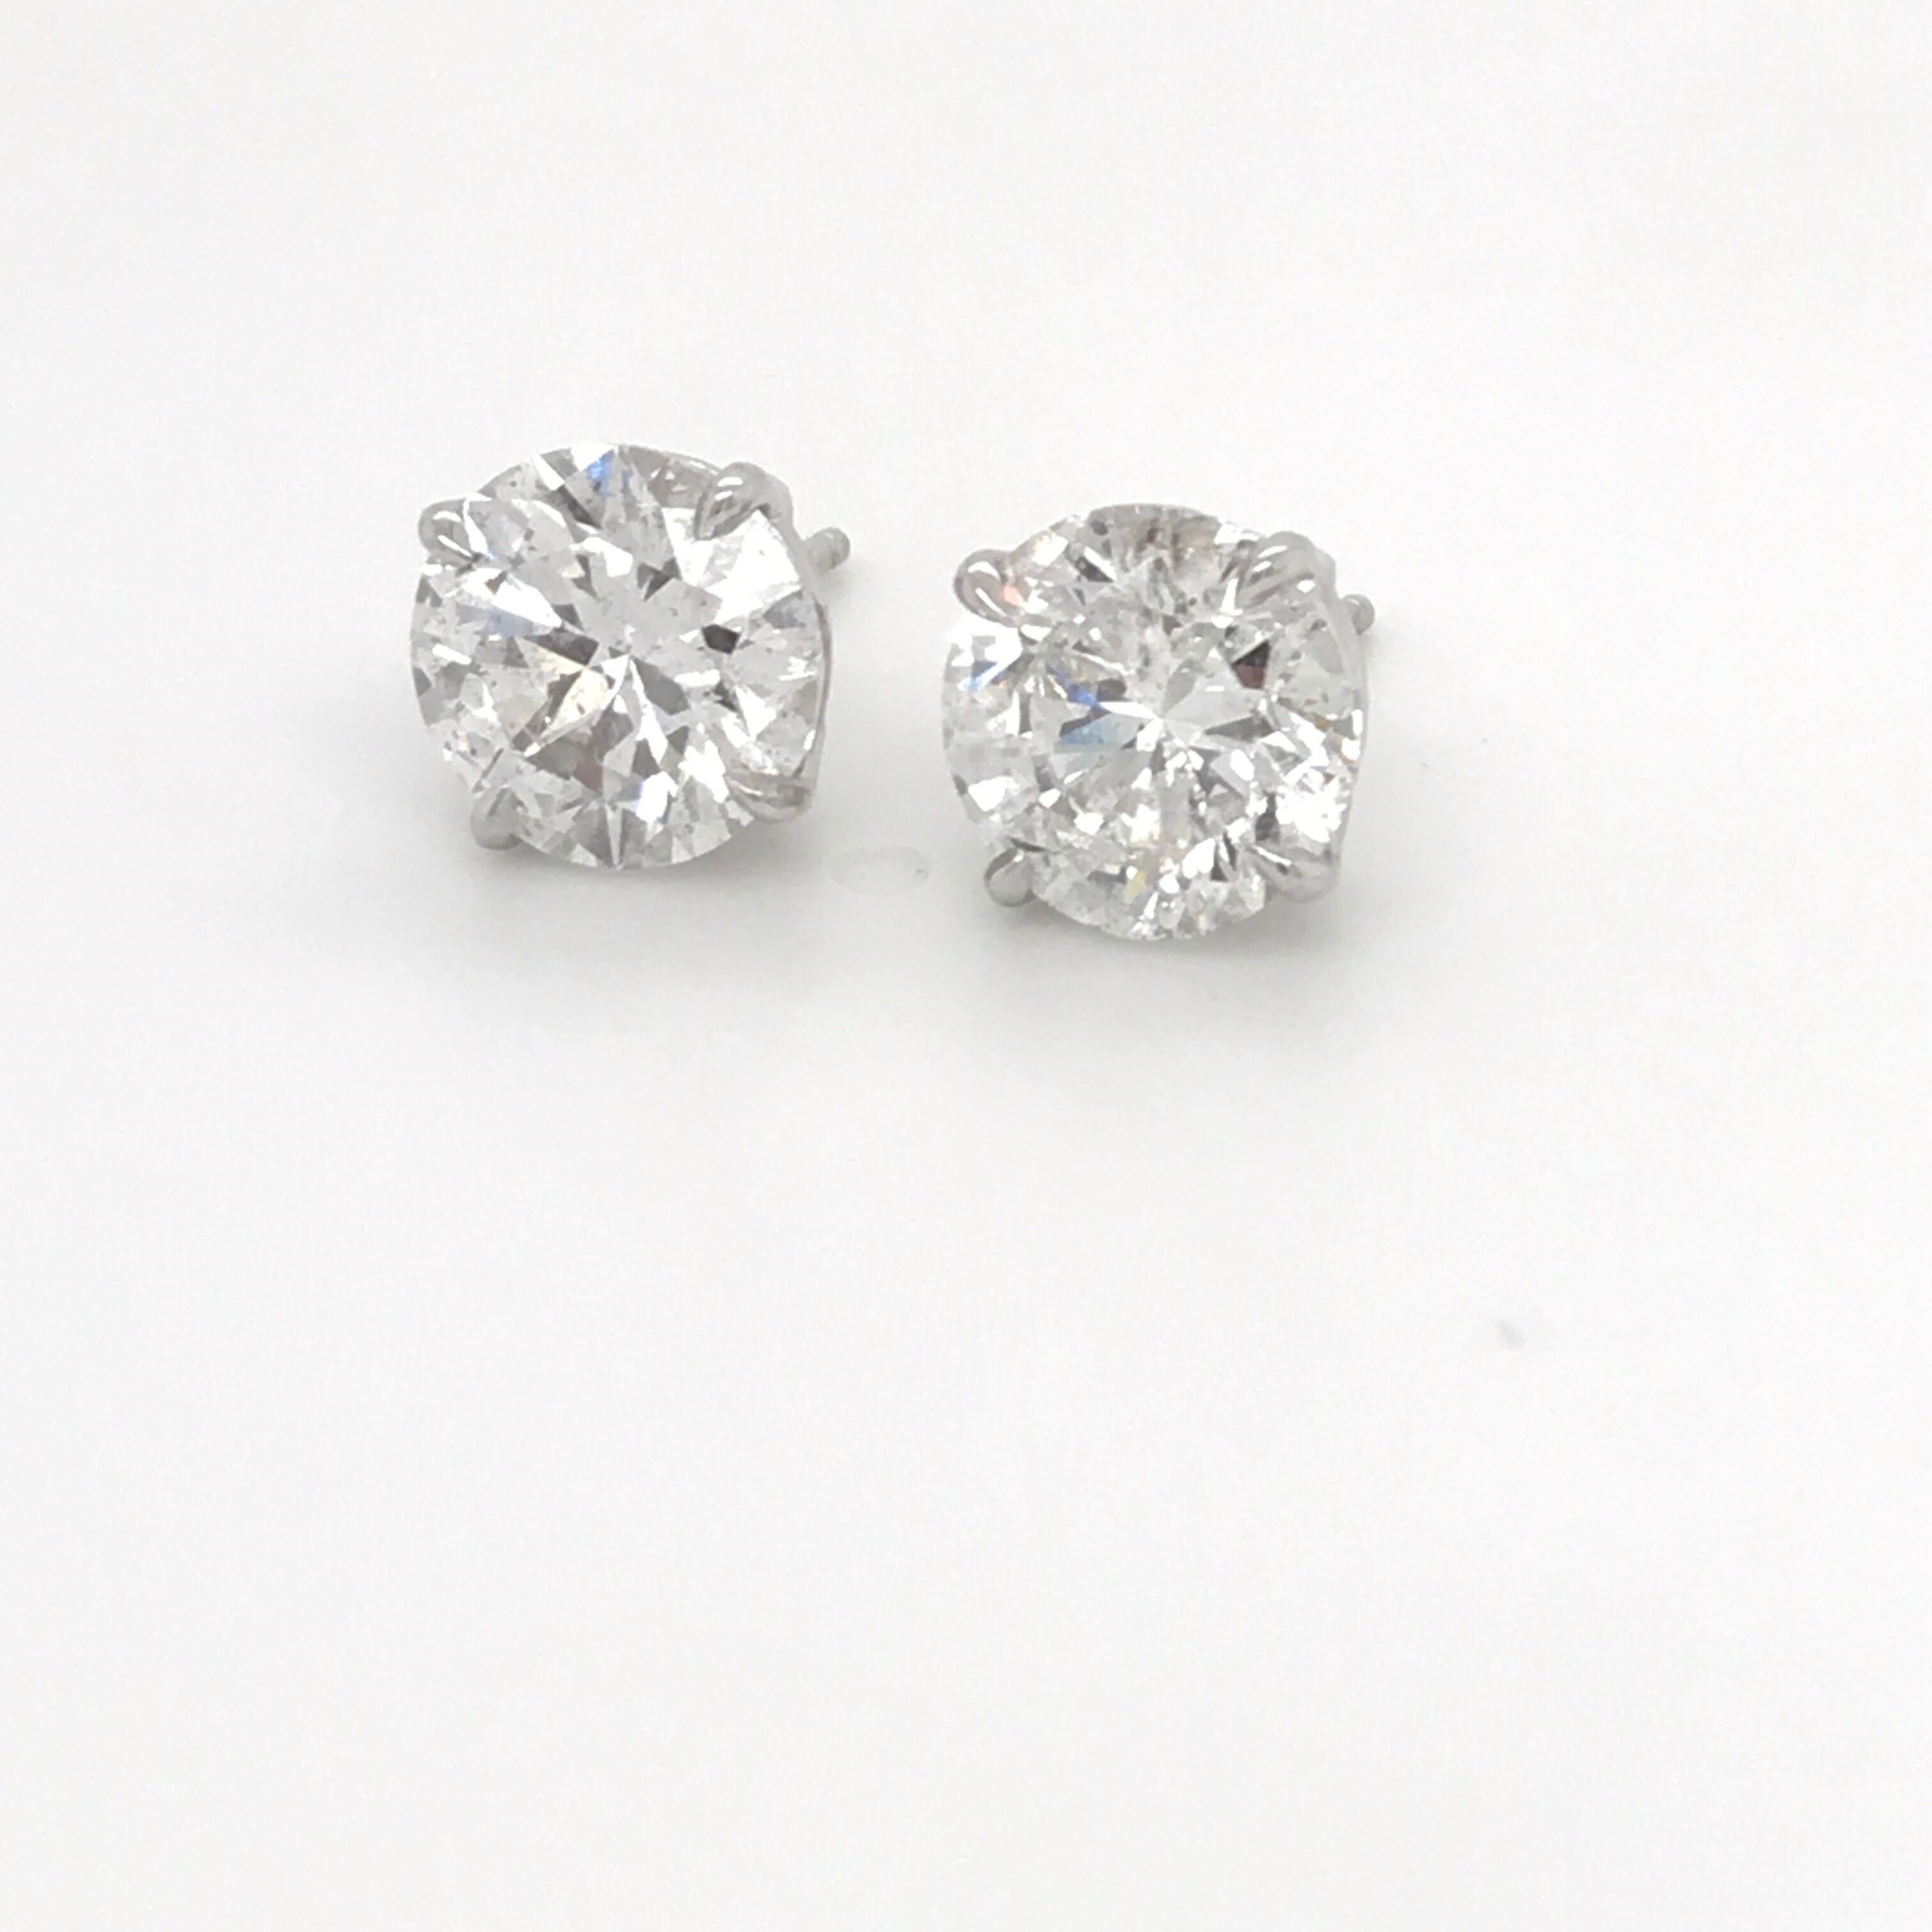 Round Cut GIA Certified Diamond Stud Earrings 4.71 Carat E-F